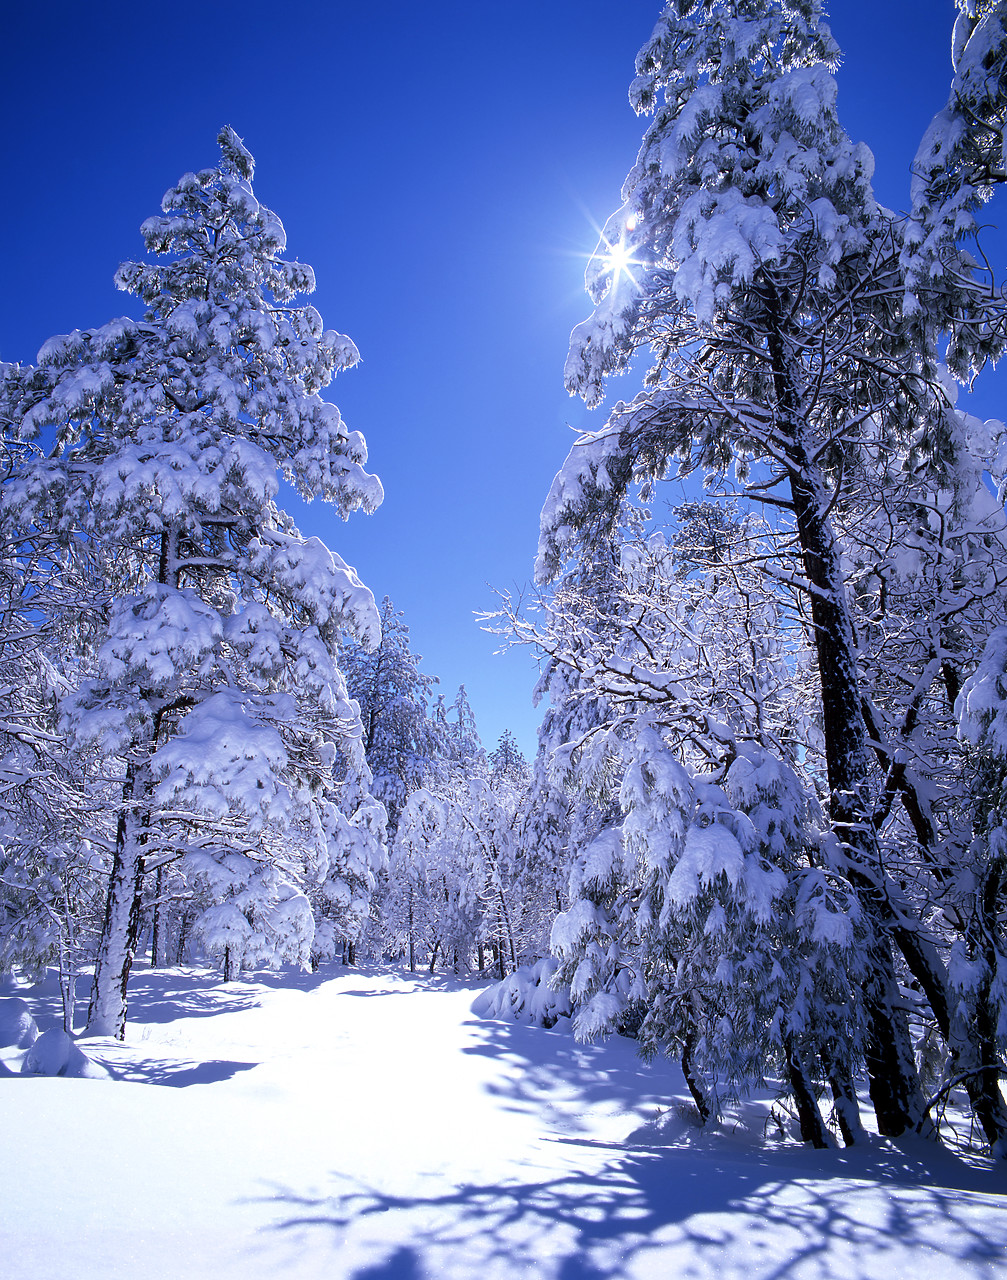 #980587-1 - Pine Trees in Snow, Flagstaff, Arizona, USA